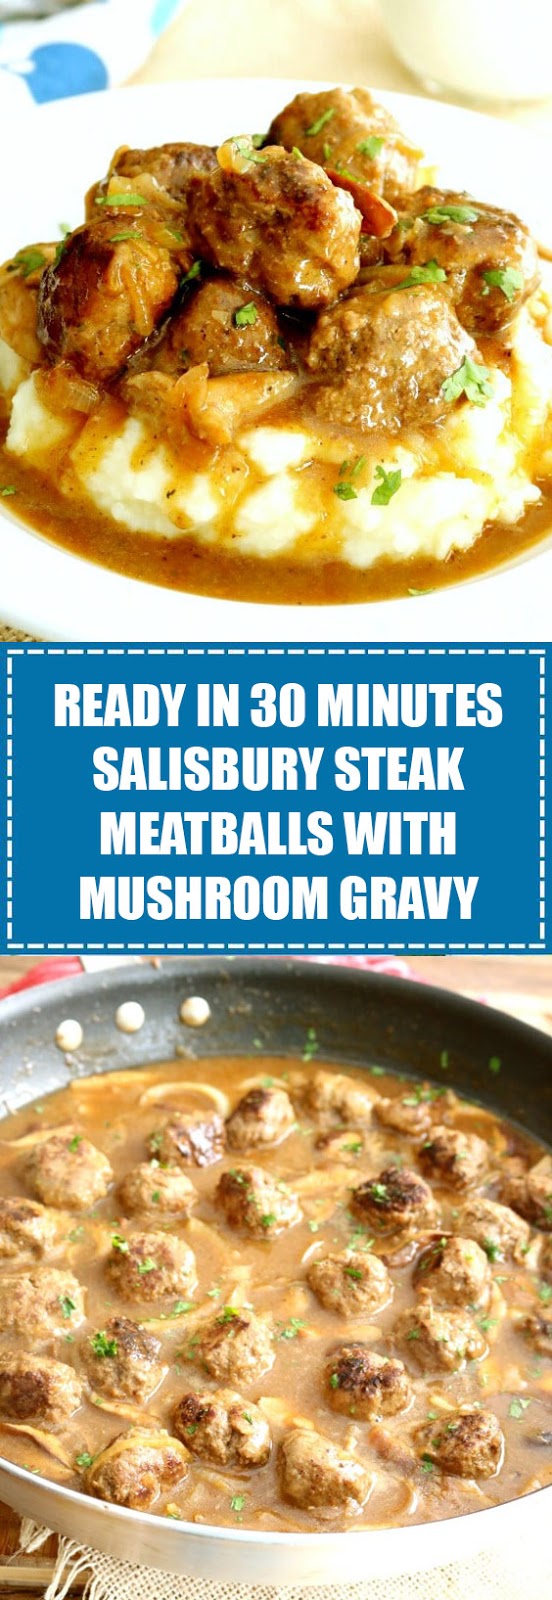 Salisbury Steak Meatballs with Mushroom Gravy